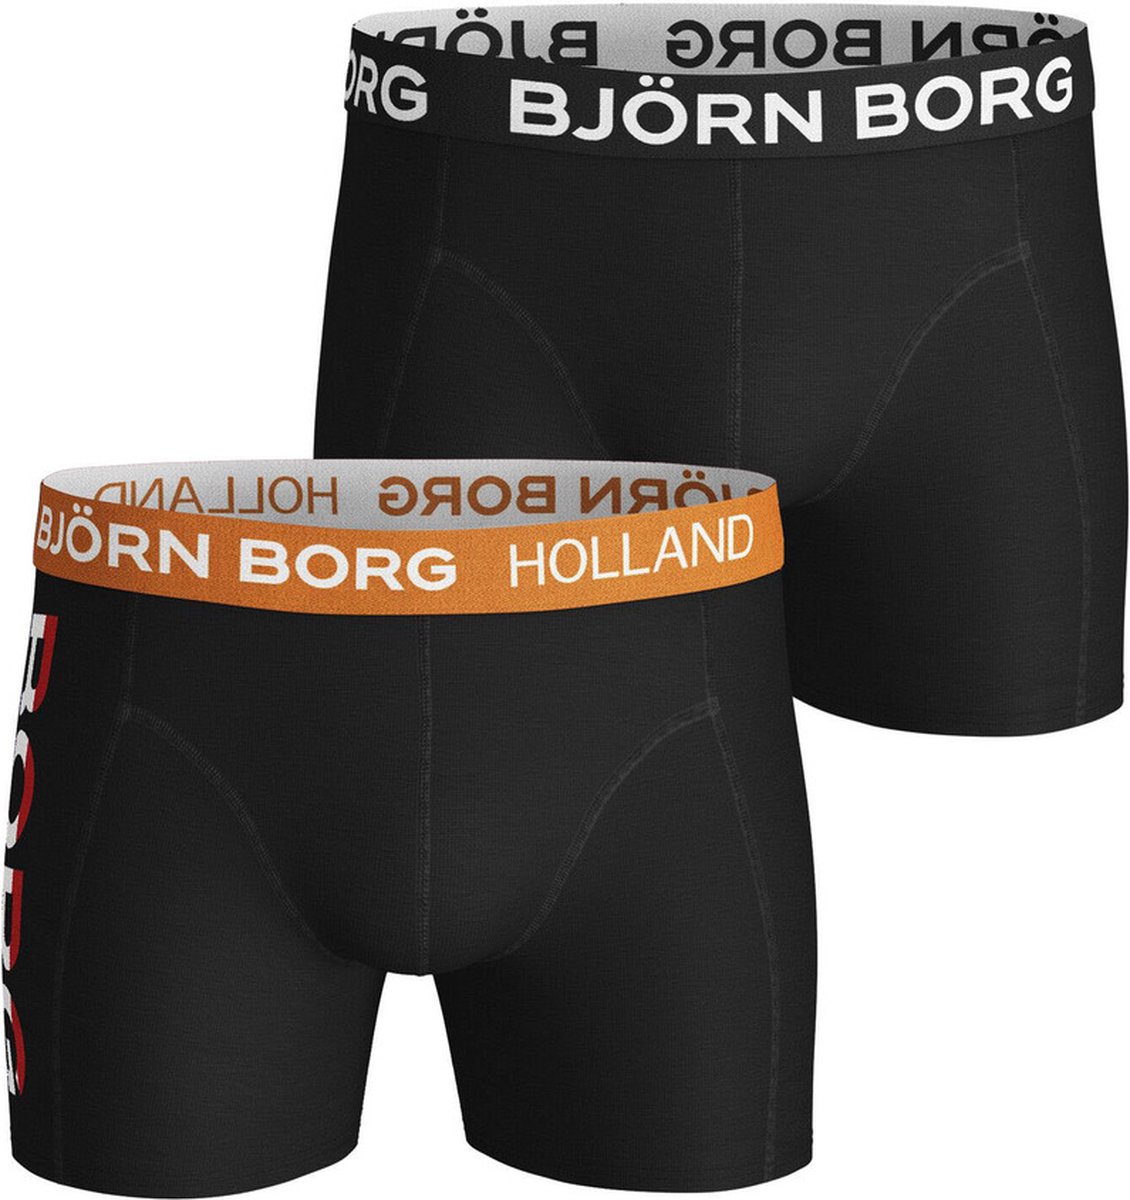 Bjorn Borg - Boxershorts 2-Pack Holland - XL - Body-fit | bol.com